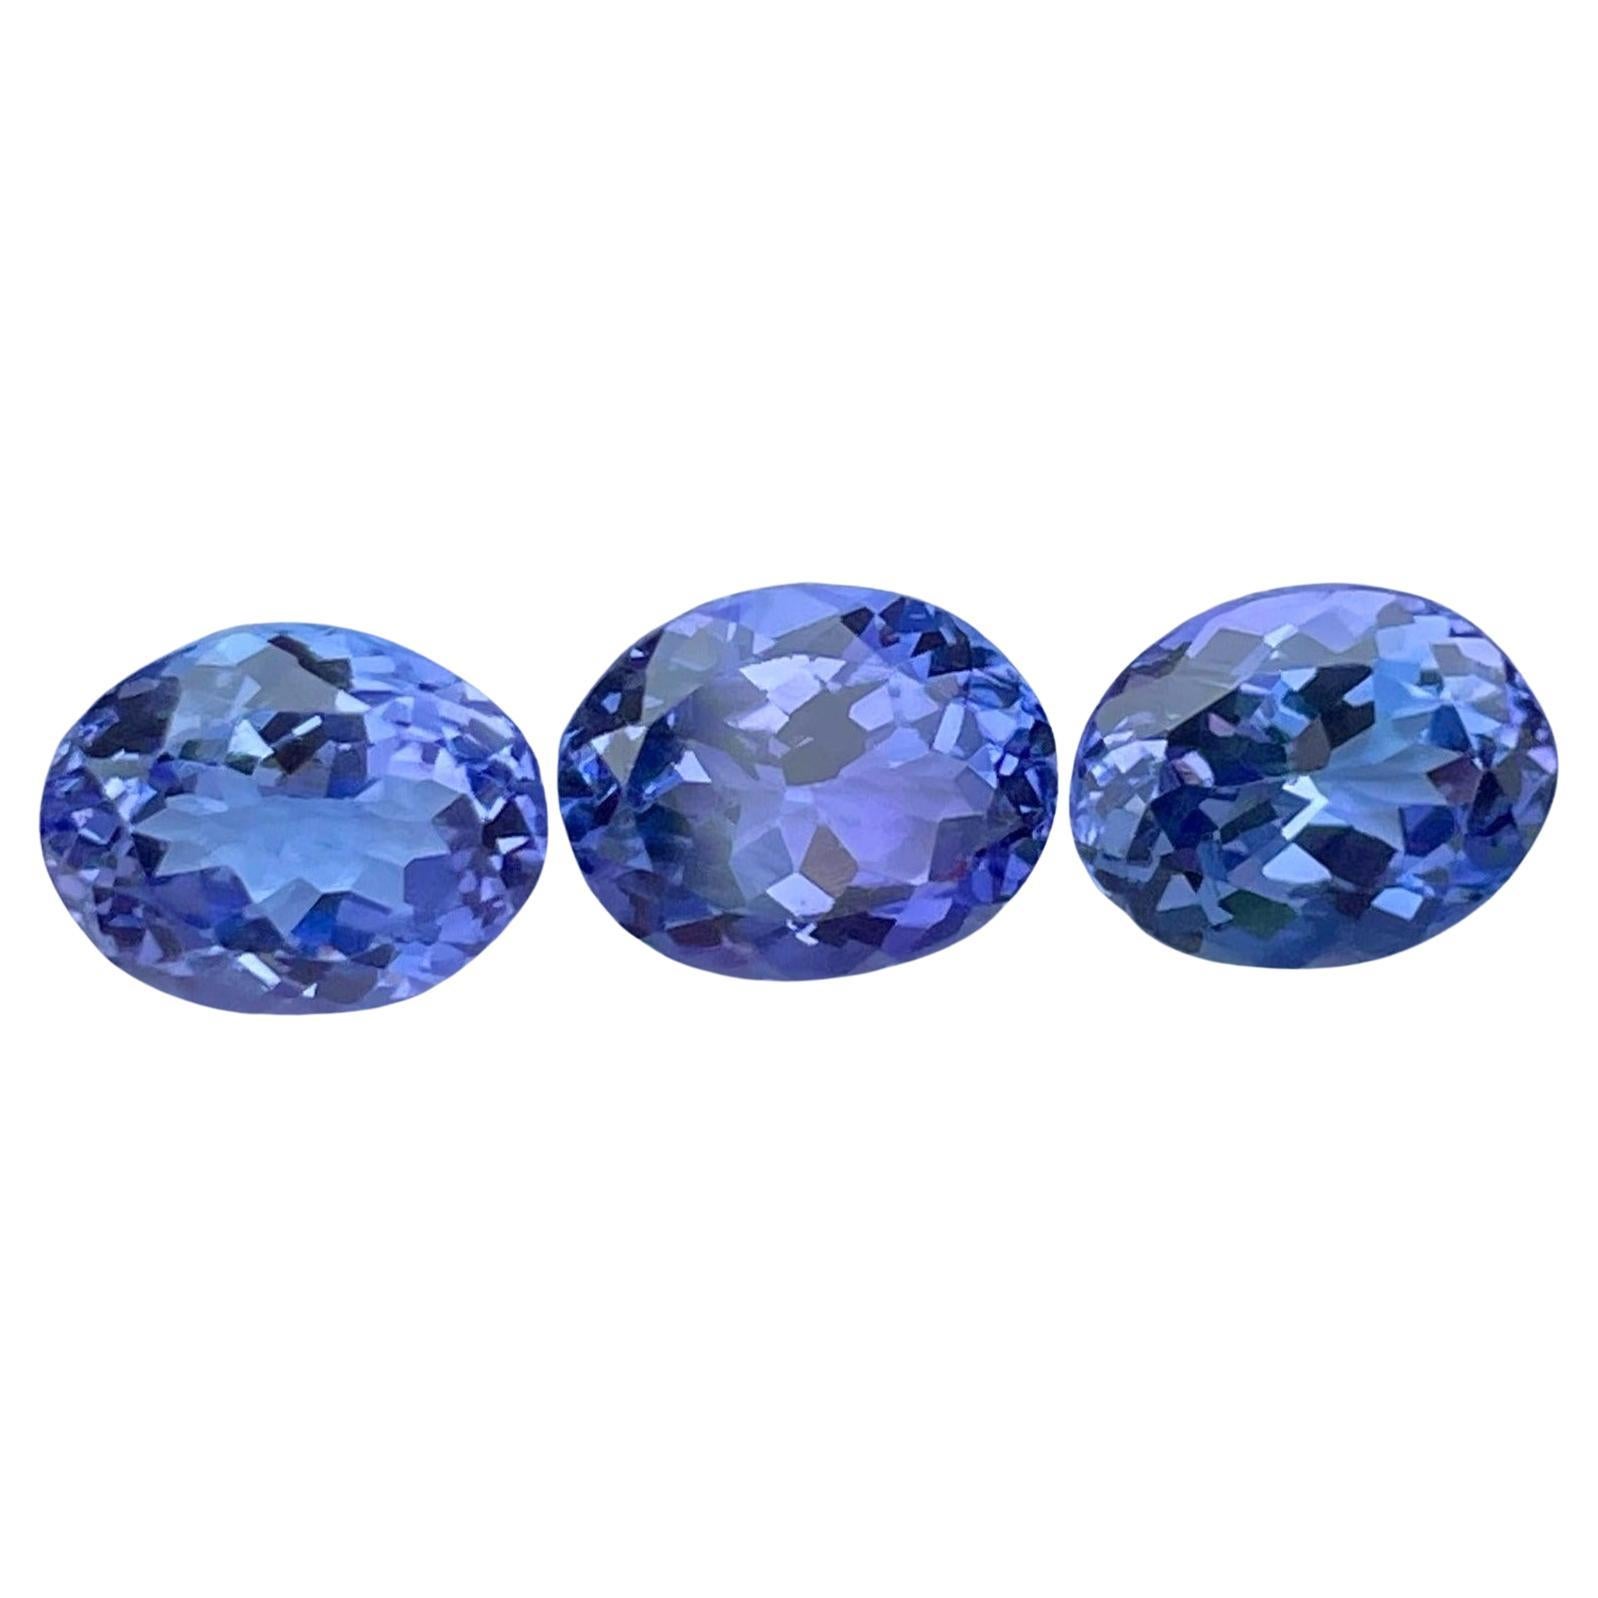 Precious Blue Tanzanite Stones 6.35 carats Oval Shaped Natural Tanzanian Gems For Sale